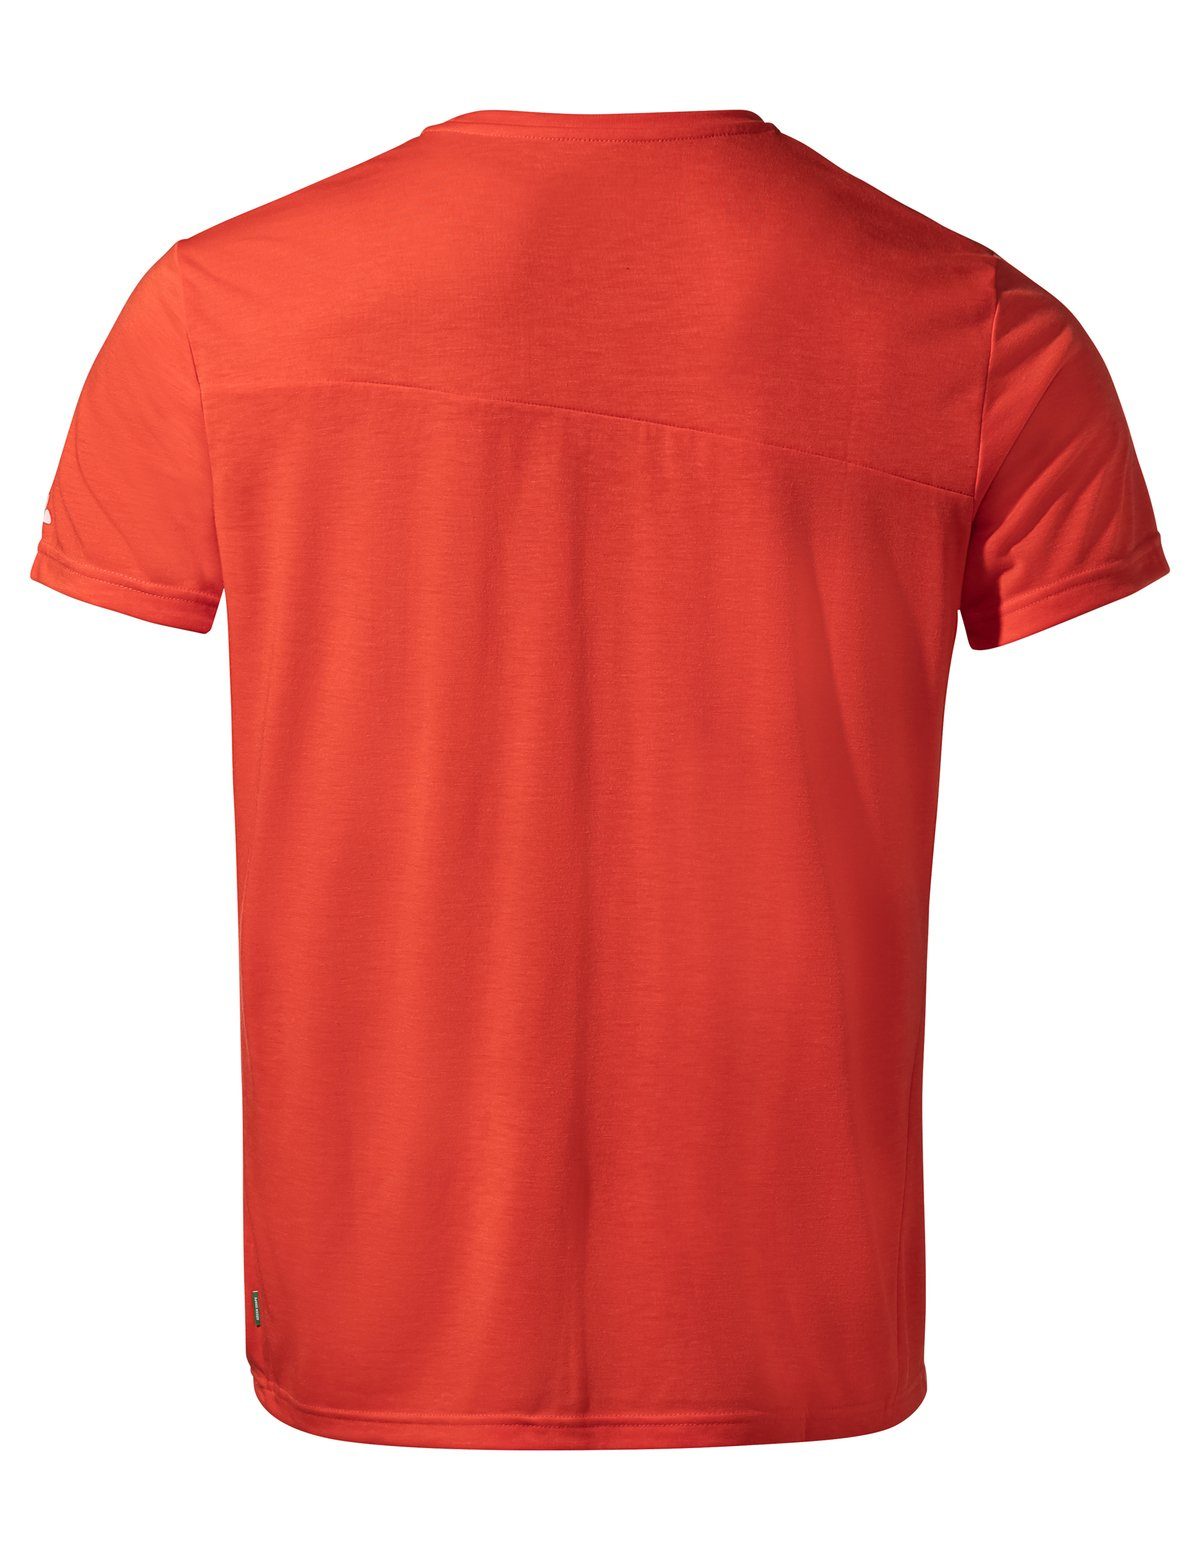 Men's Knopf red glowing (1-tlg) Grüner T-Shirt Sveit VAUDE Shirt